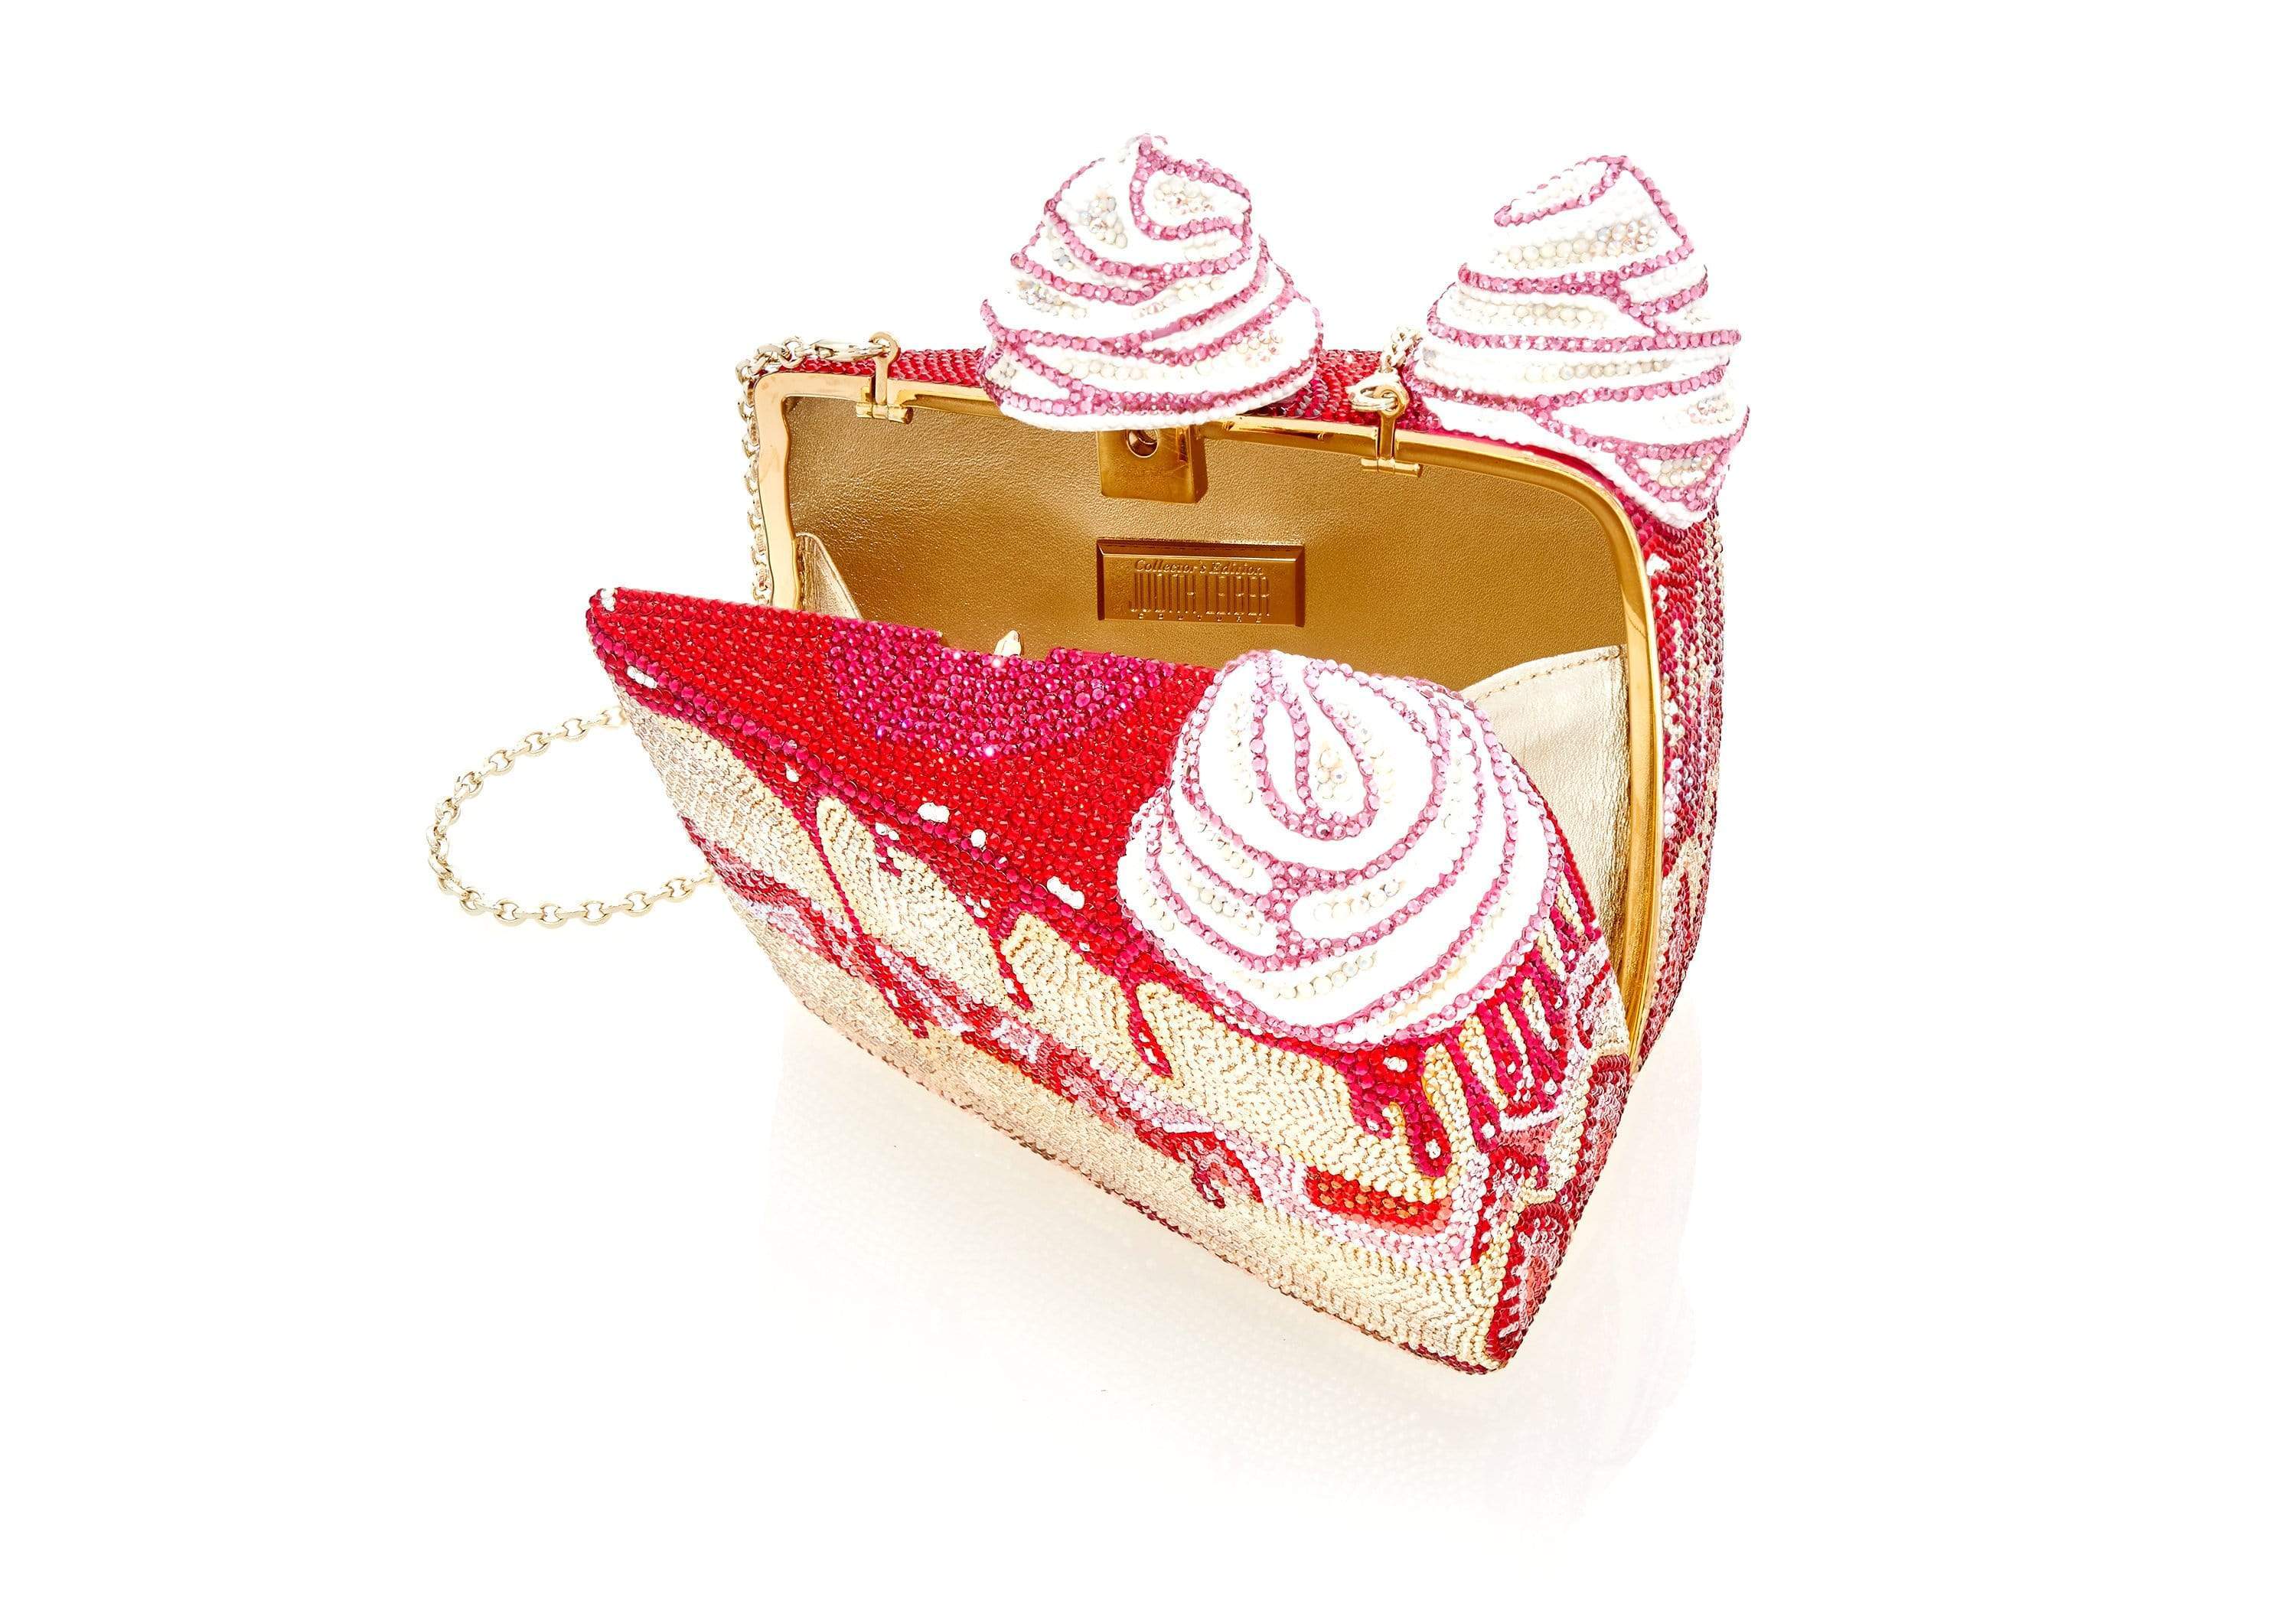 Novelty Cupcake Bag  Judith Leiber Cupcake Purse